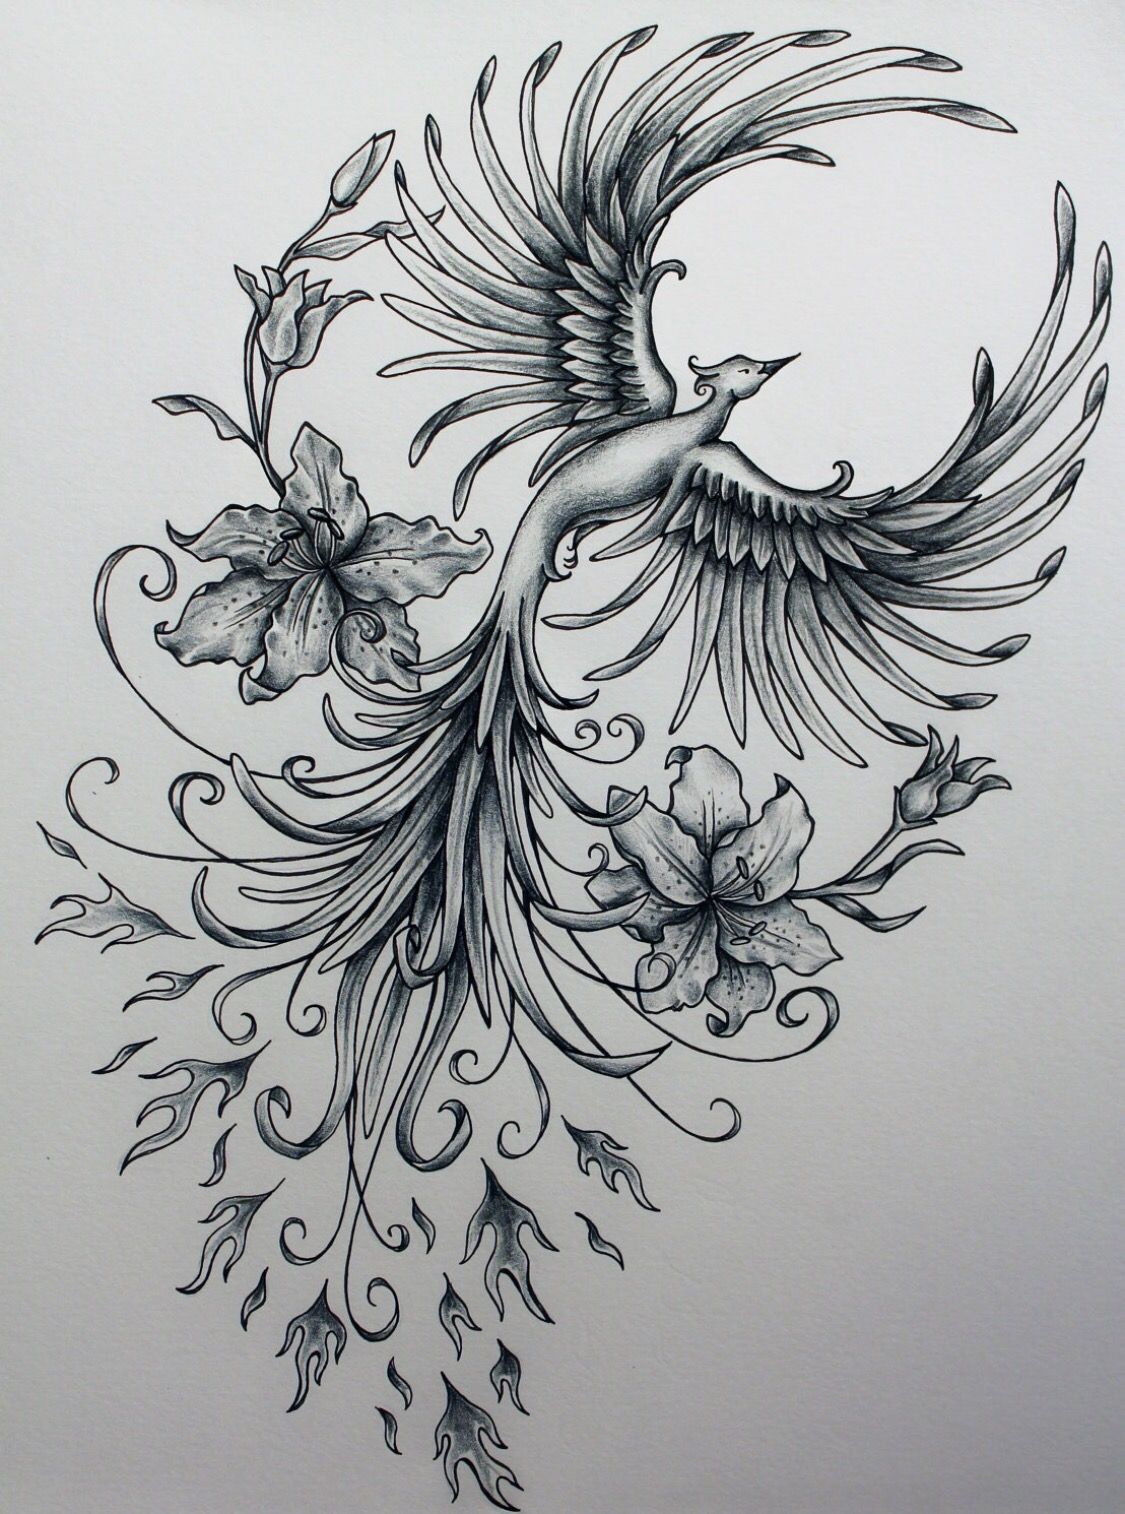 15 Phoenix Lotus Tattoo Ideas Designs